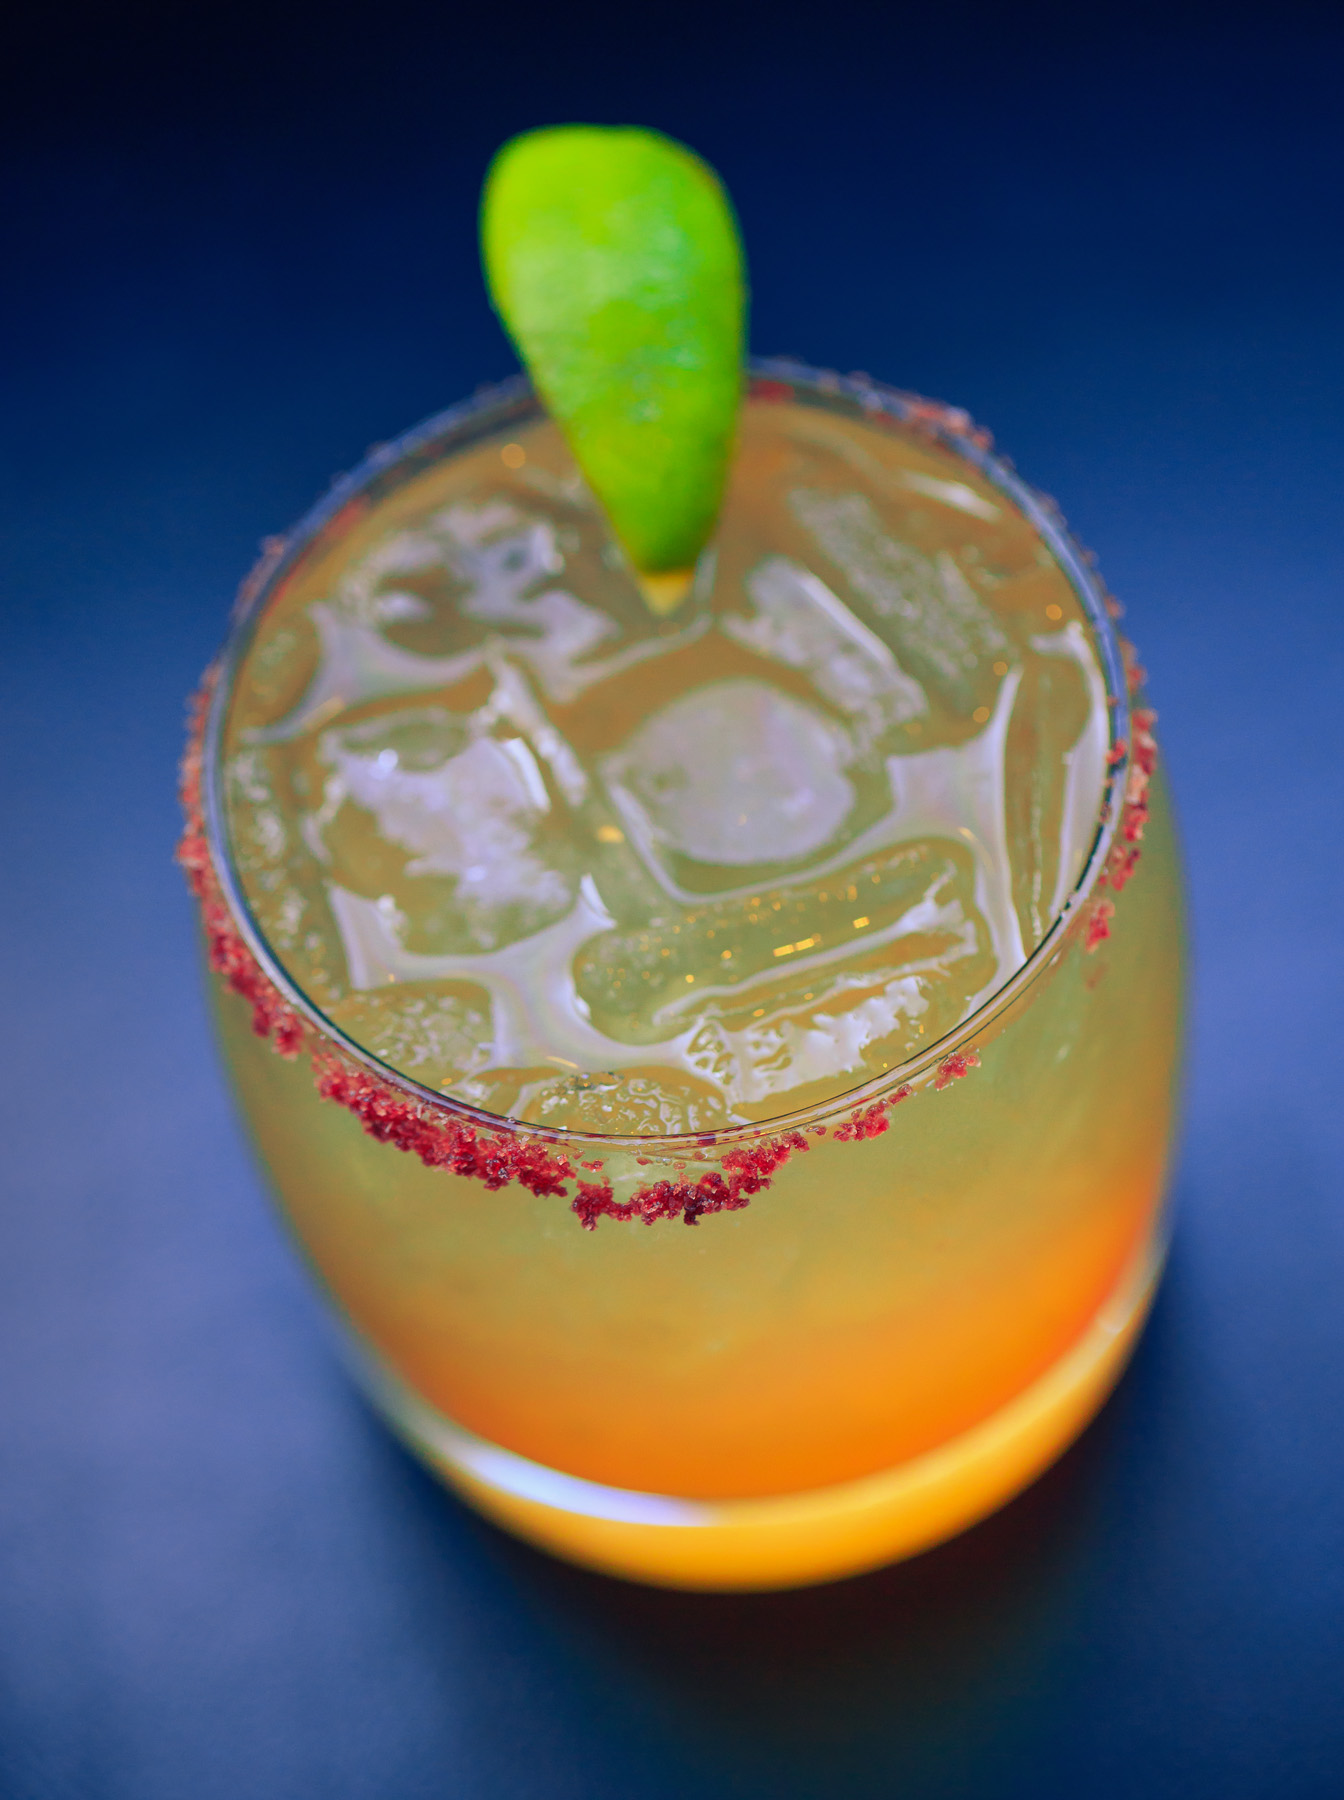 The "Bottlest Margarita", part of Bottlest's new cocktail mixology program, features Sauza Blue Reposado Tequila, orange liqueur, and a house-made Pinot Noir salt rim.